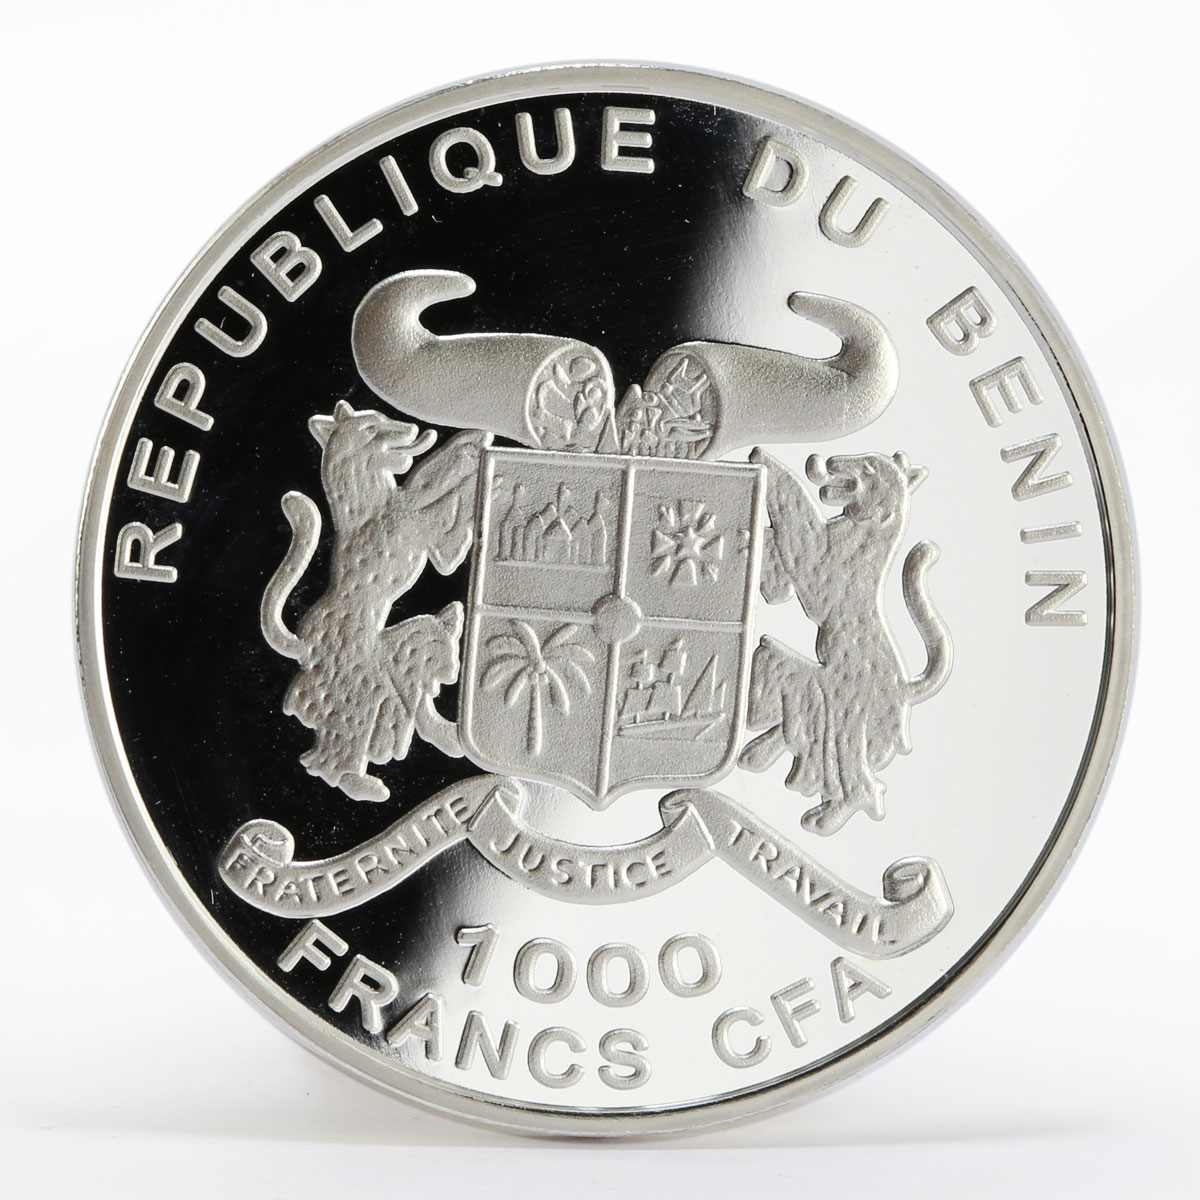 Benin 1000 francs Leif Ericson New World explorer ship proof silver coin 2001